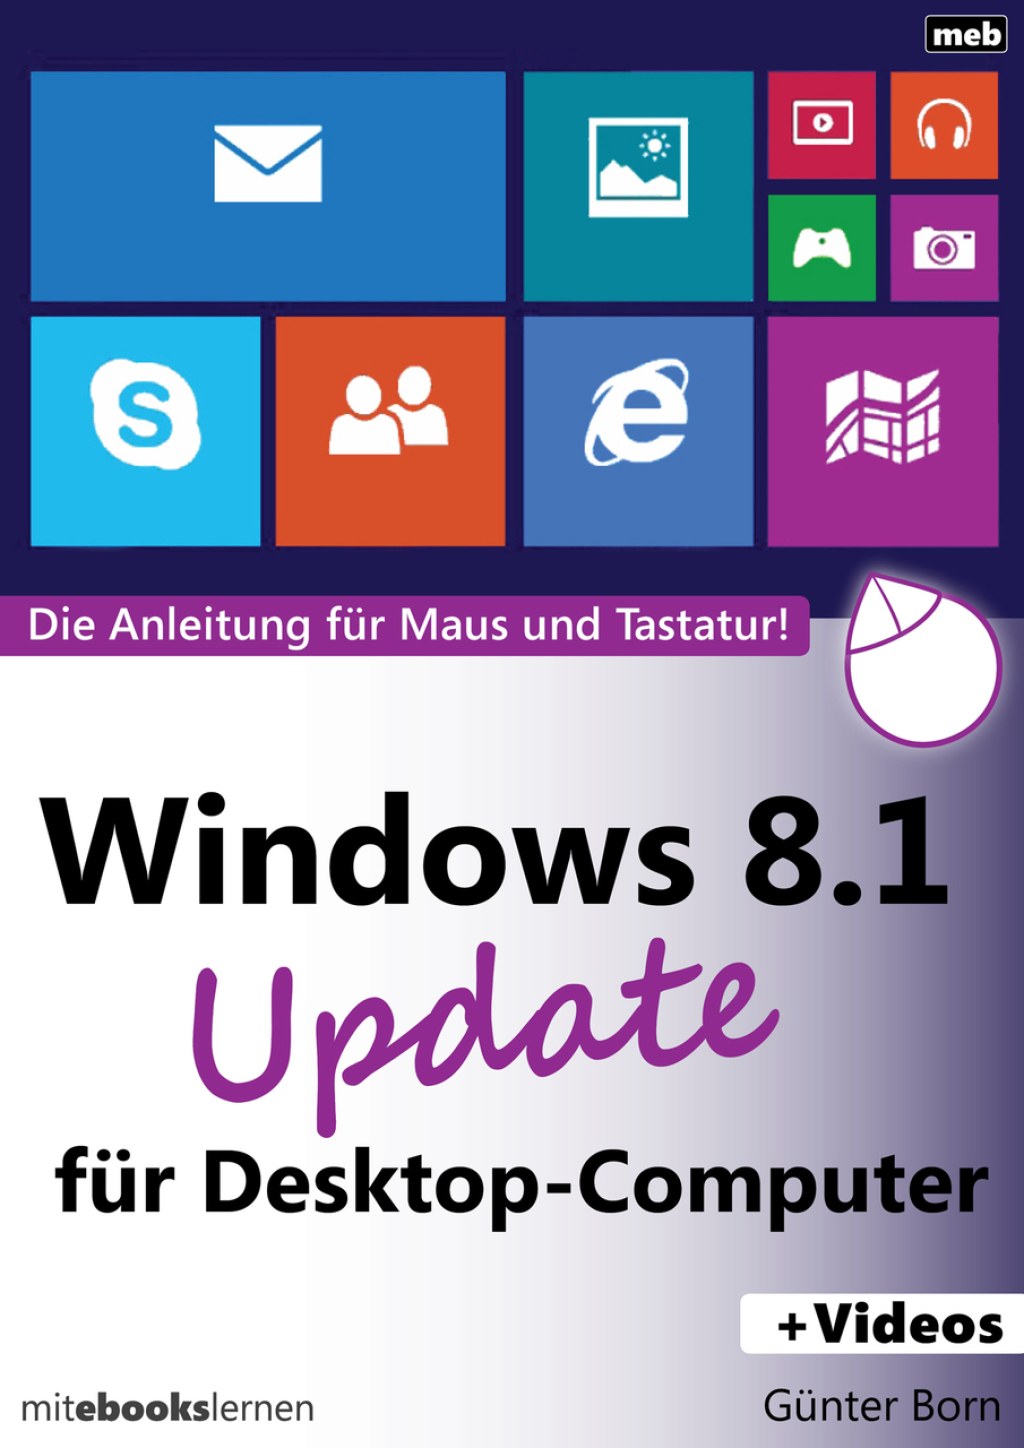 desktop computer 8.1 windows - Windows